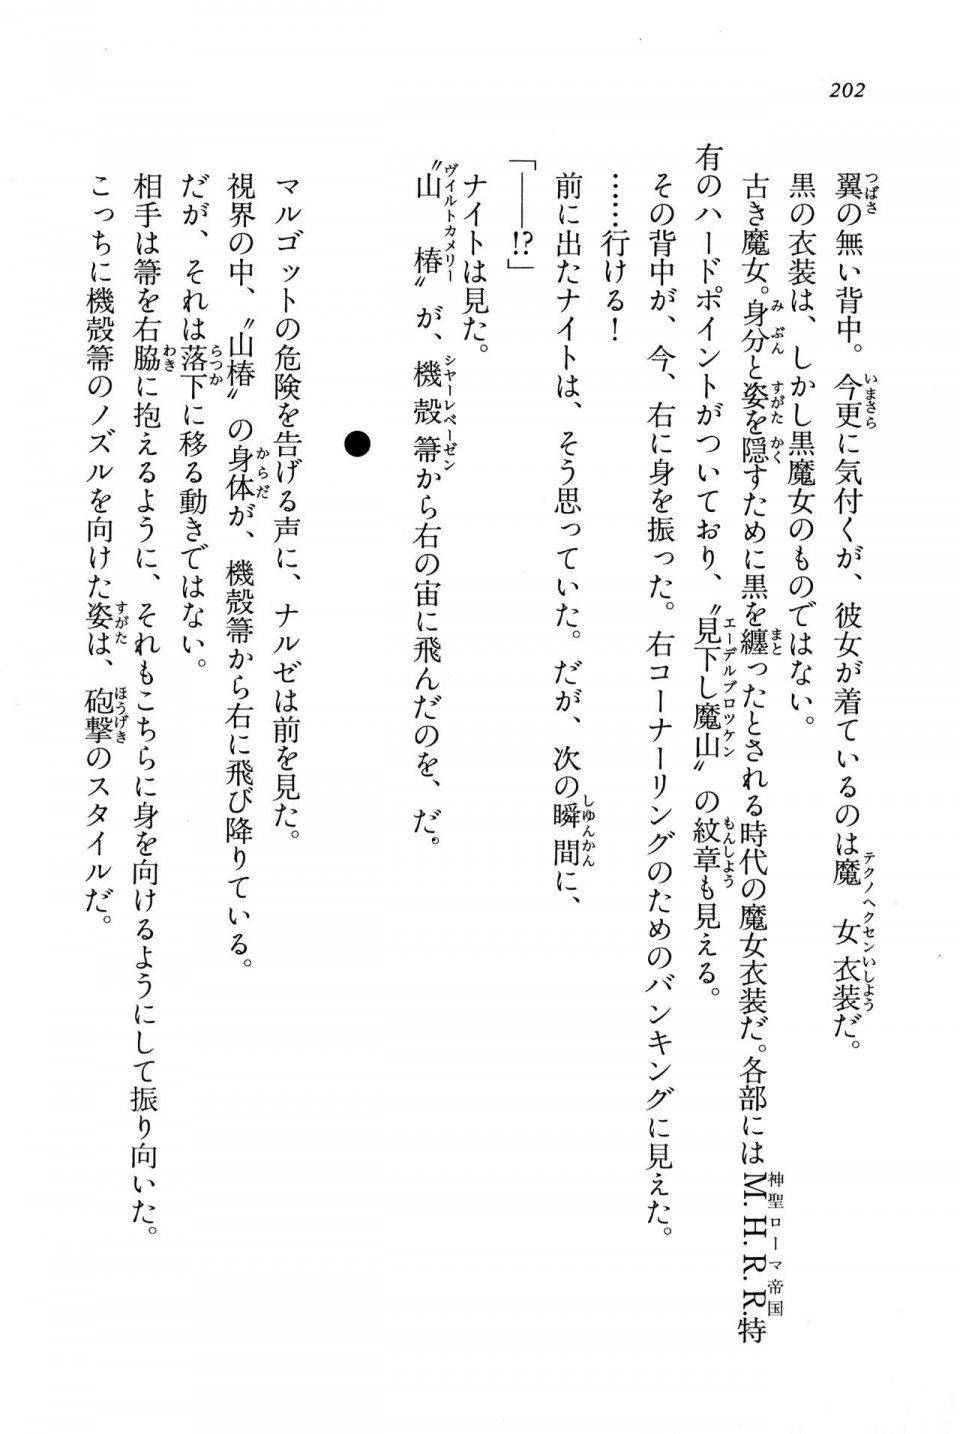 Kyoukai Senjou no Horizon BD Special Mininovel Vol 7(4A) - Photo #206